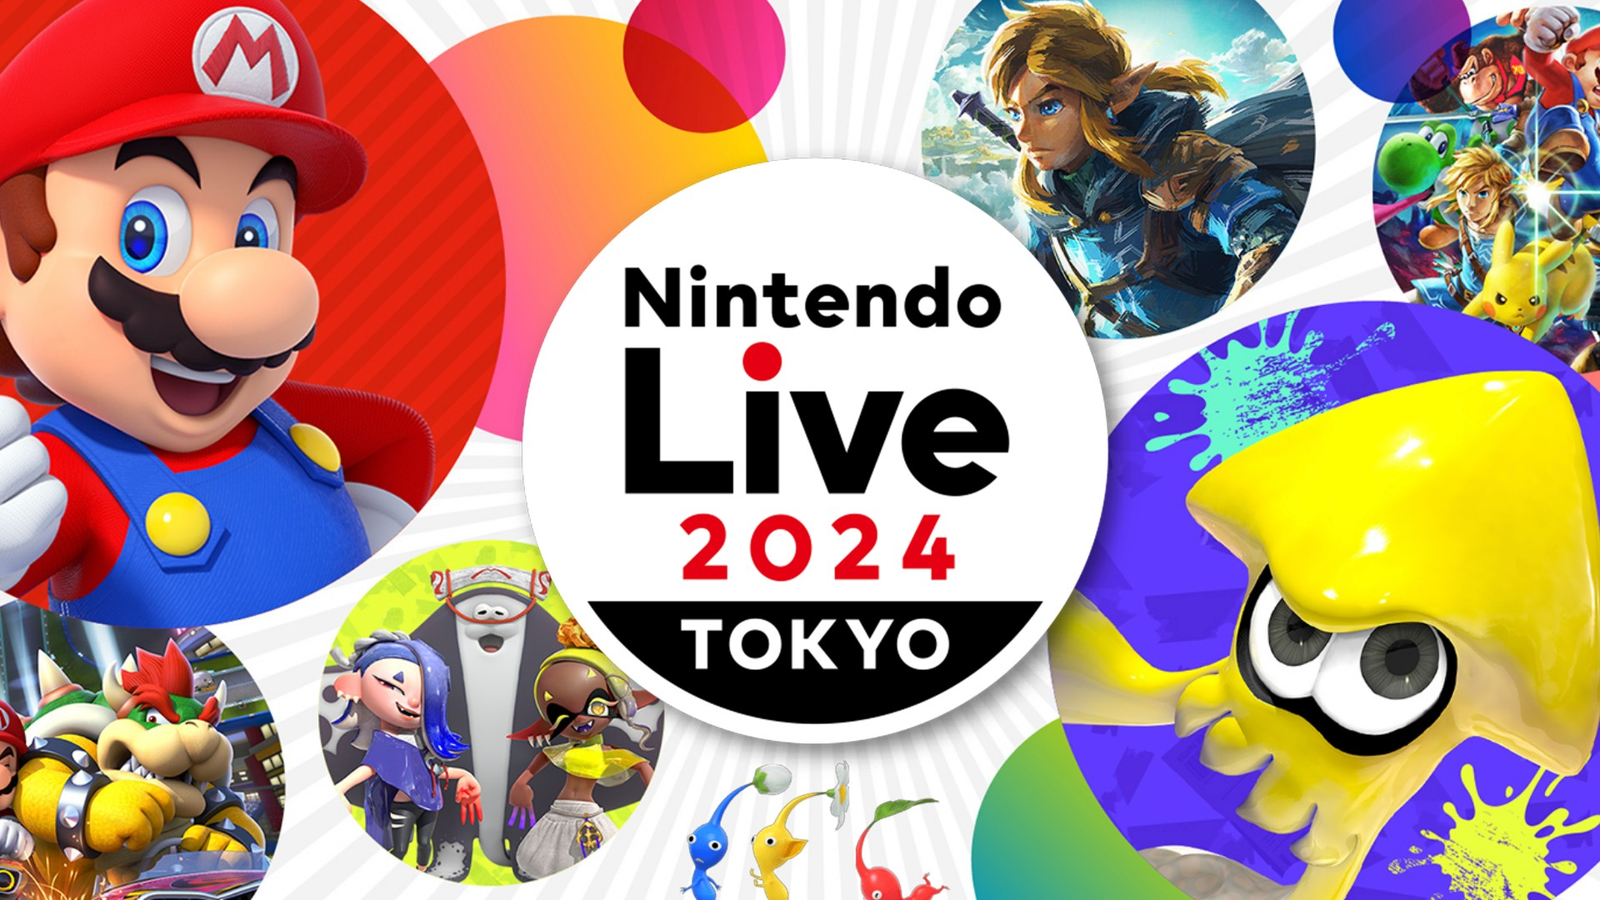 Nintendo Announces It Will Stop Feeding Yoshi on March 1st, 2024